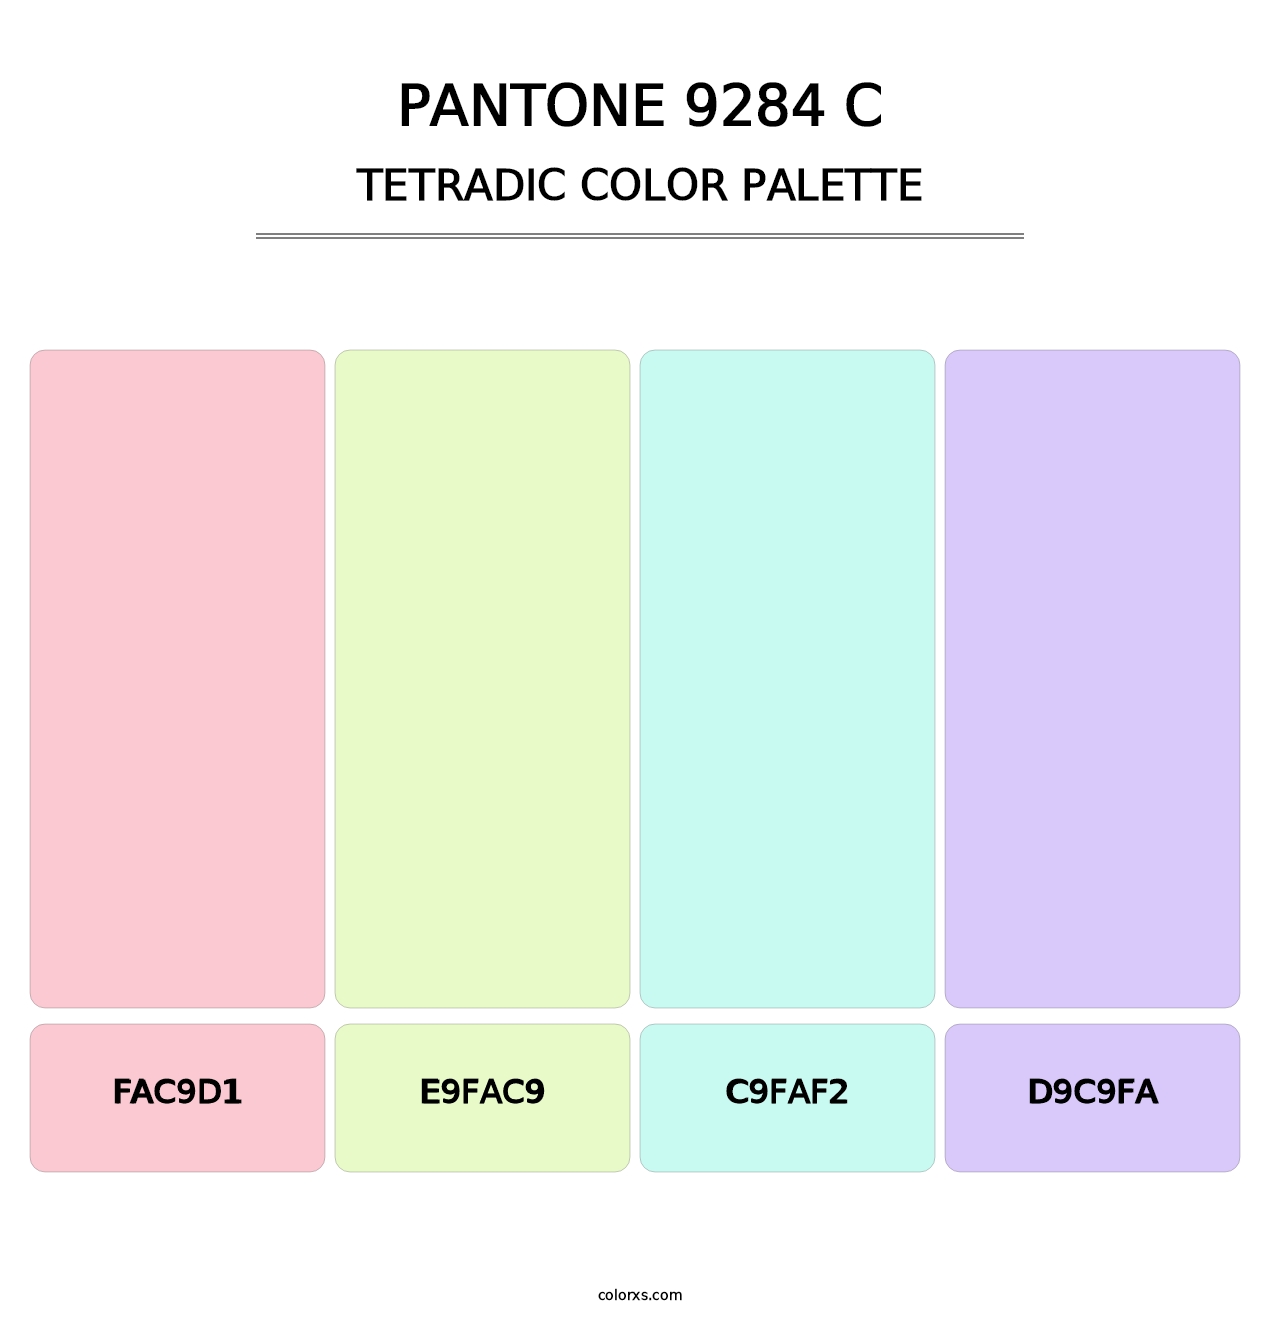 PANTONE 9284 C - Tetradic Color Palette